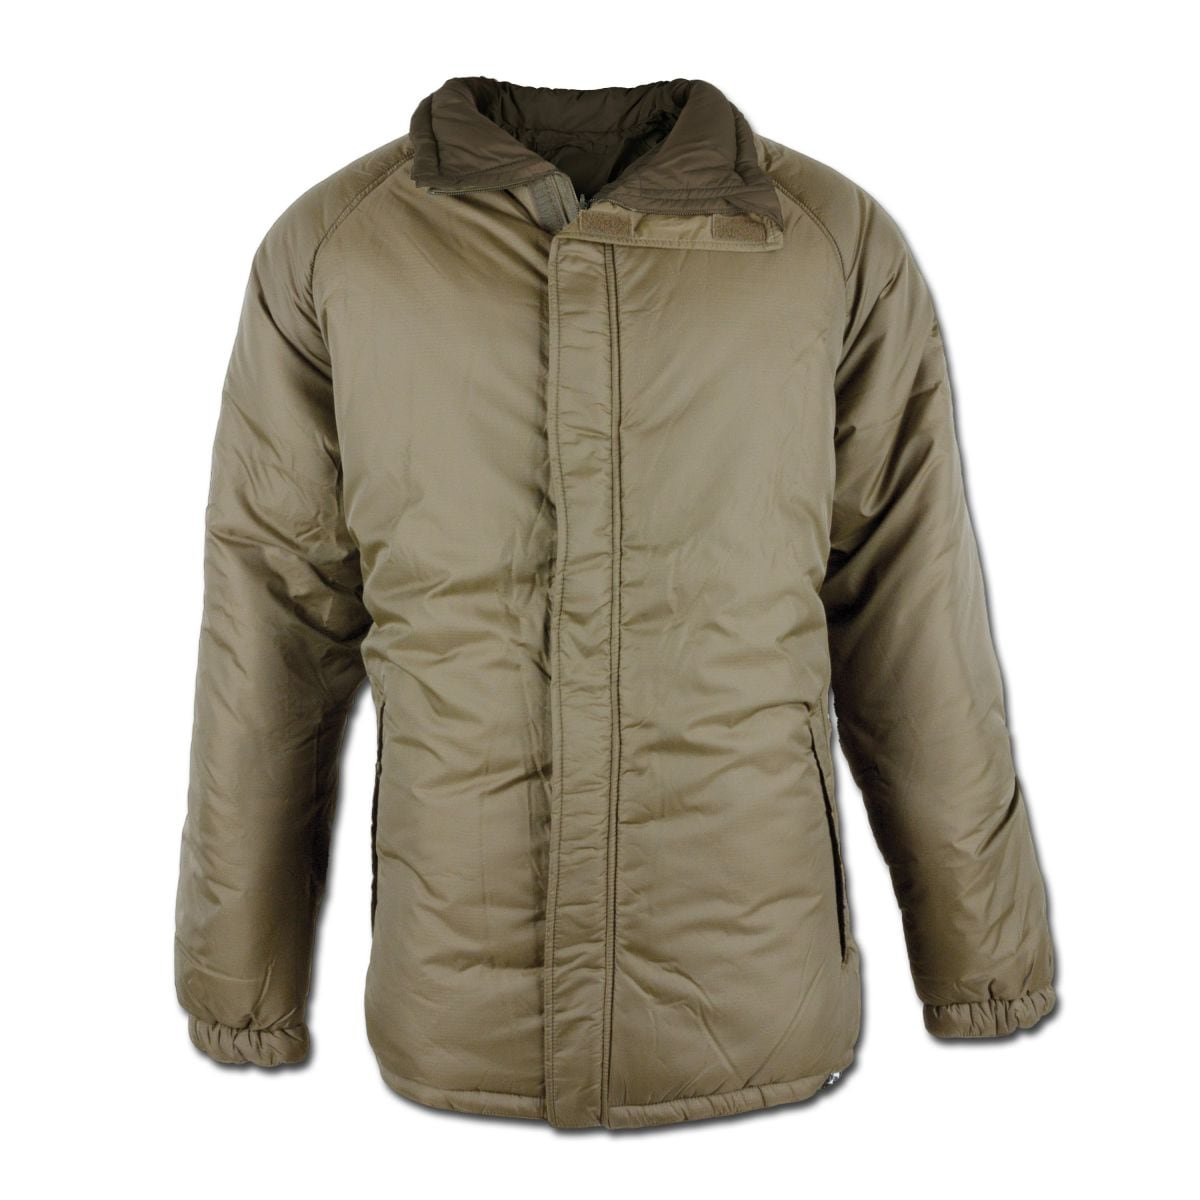 Carinthia Thermal Jacket G-Loft Reversible olive | Carinthia Thermal ...